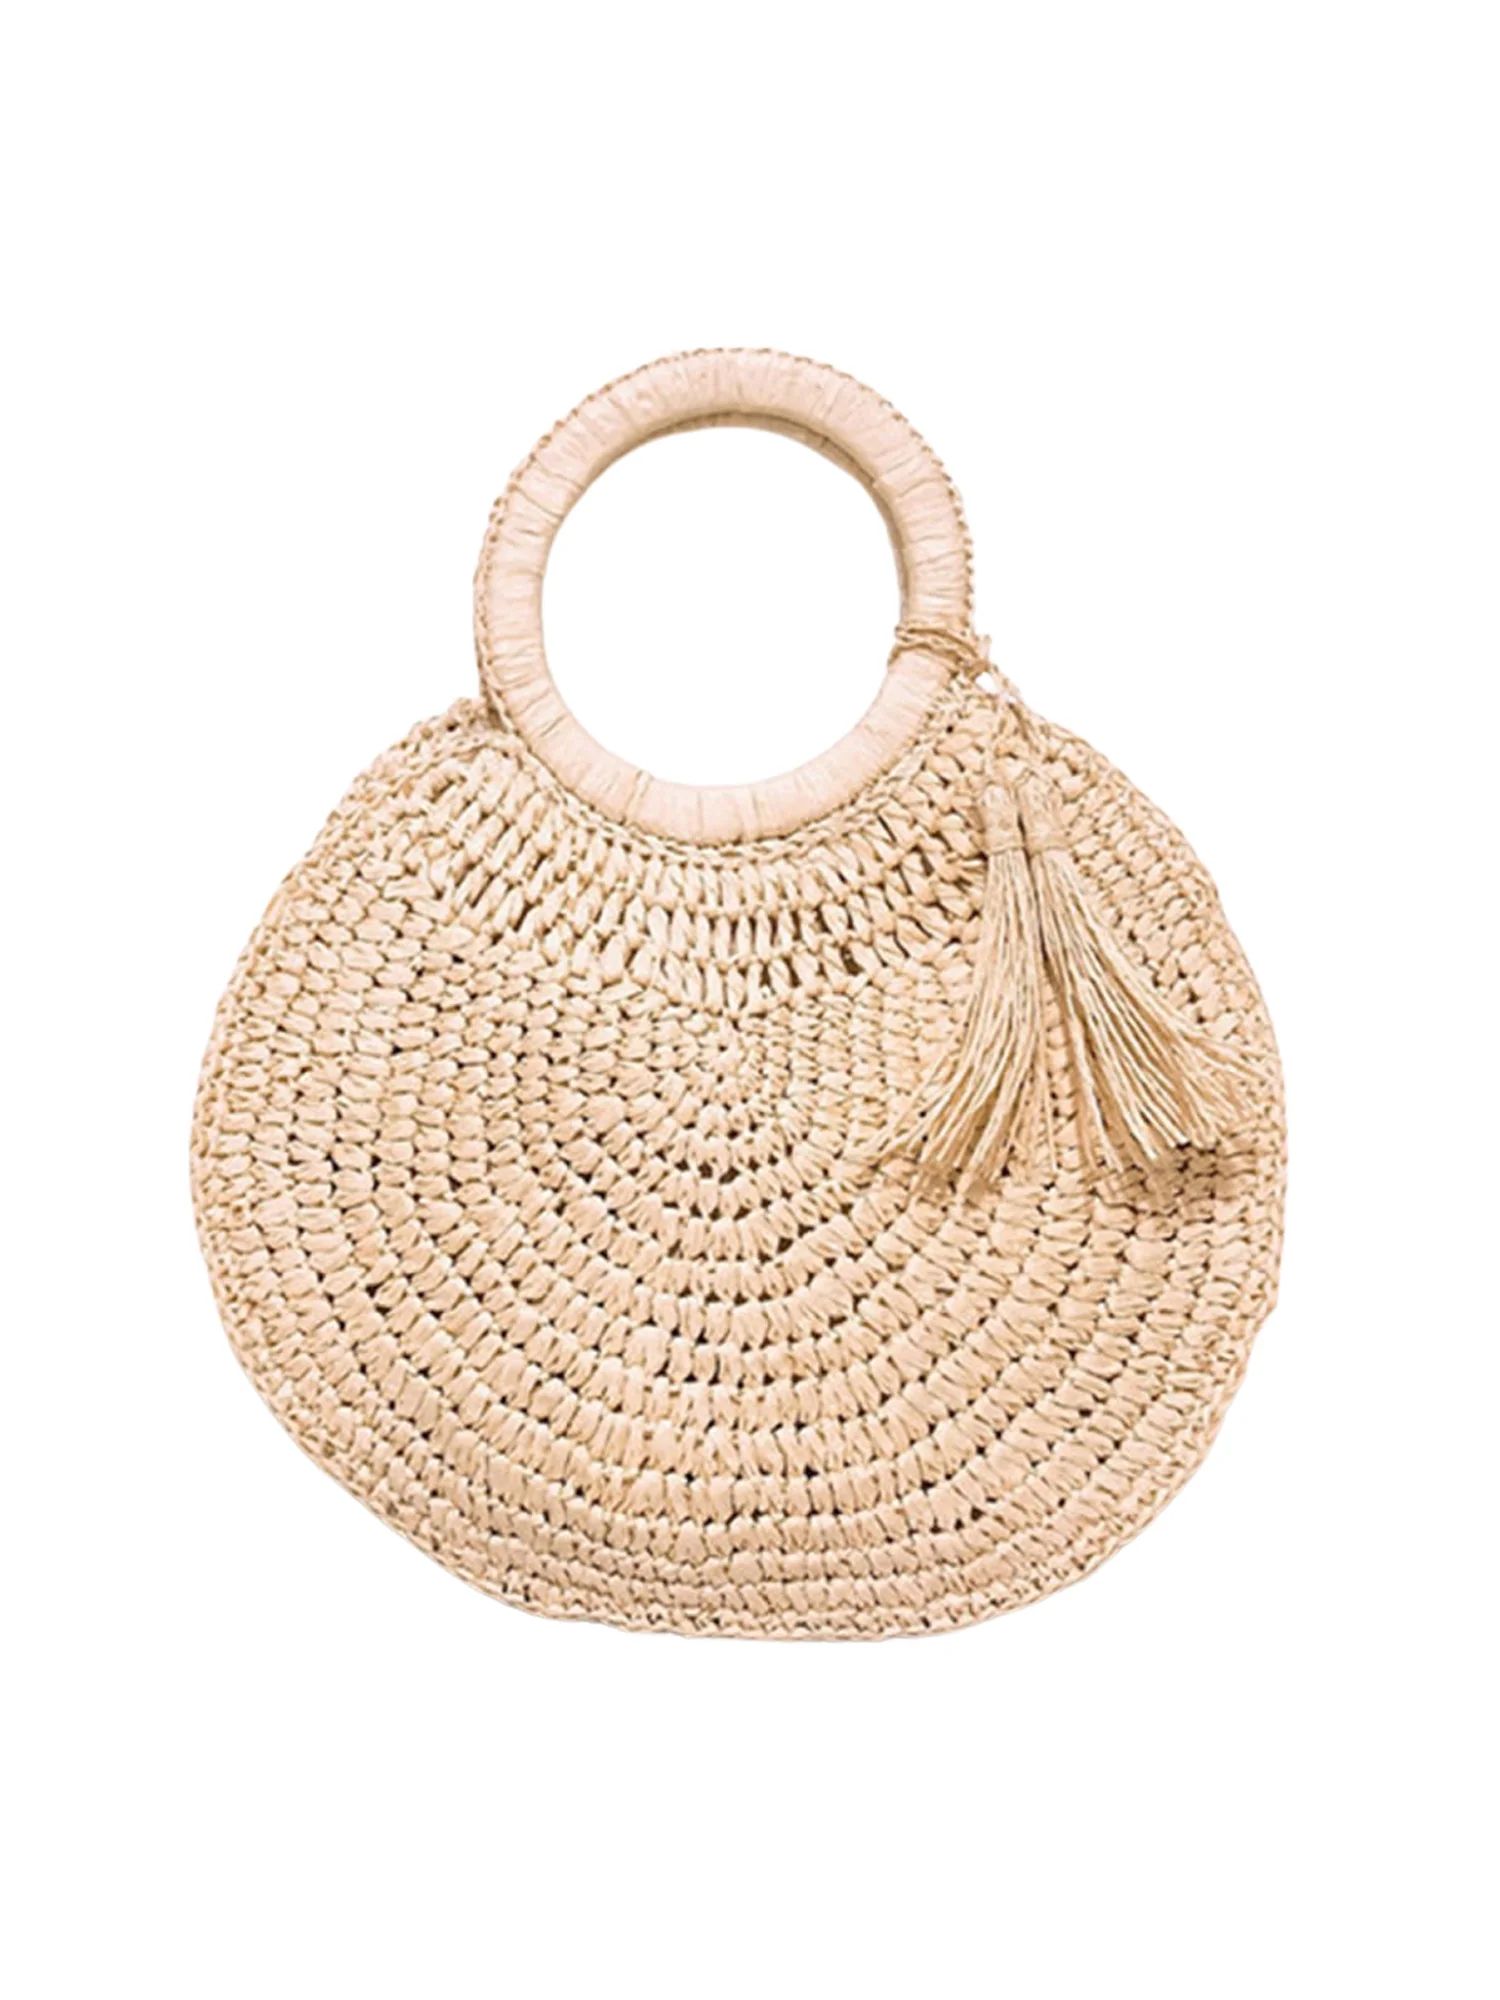 FOCUSNORM Summer Rattan Bag for Women Straw Handbag Beach Sea Straw Rattan Clutch Bags | Walmart (US)